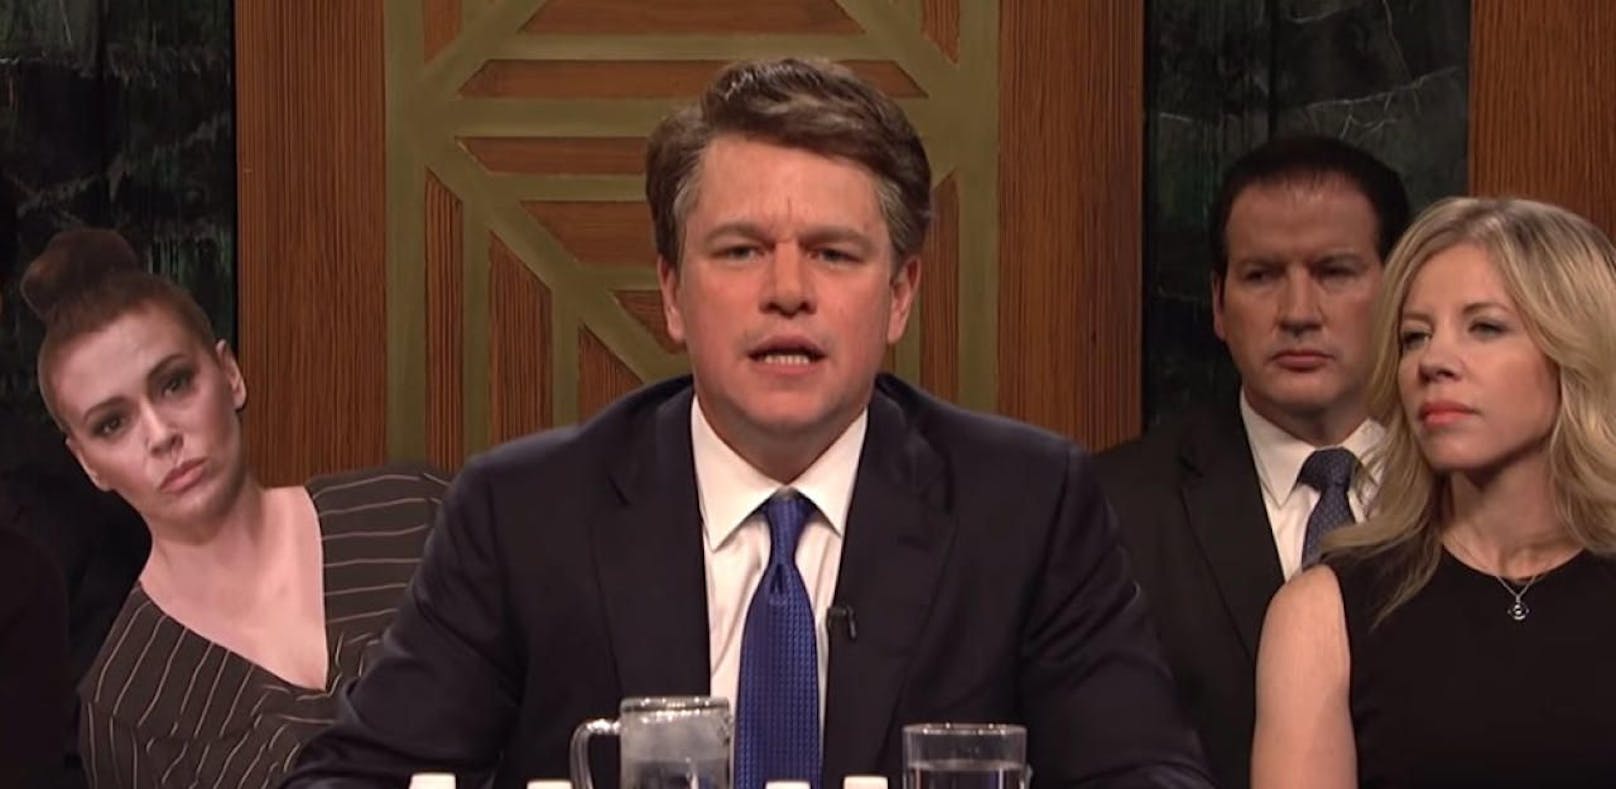 Matt Damon brilliert bei "SNL" als Brett Kavanaugh